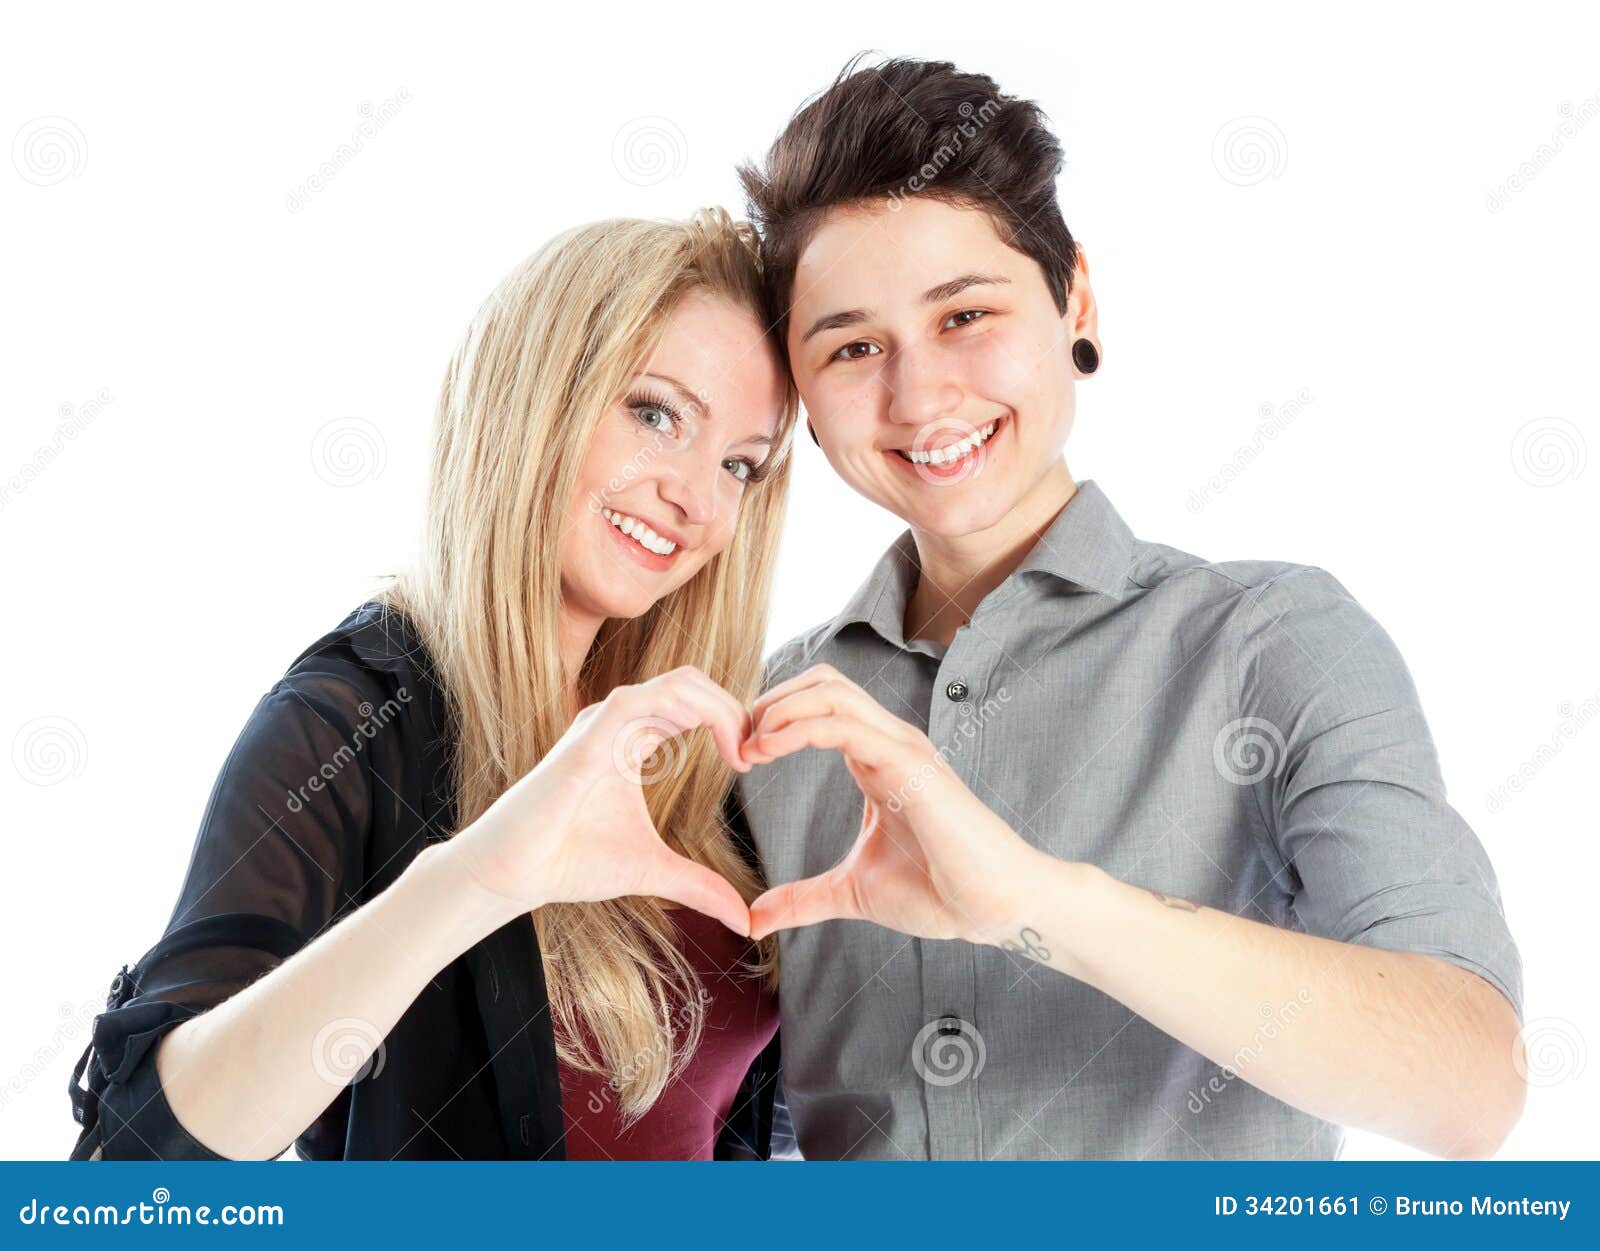 Same Sex Couple Isolated On White Background Stock Image